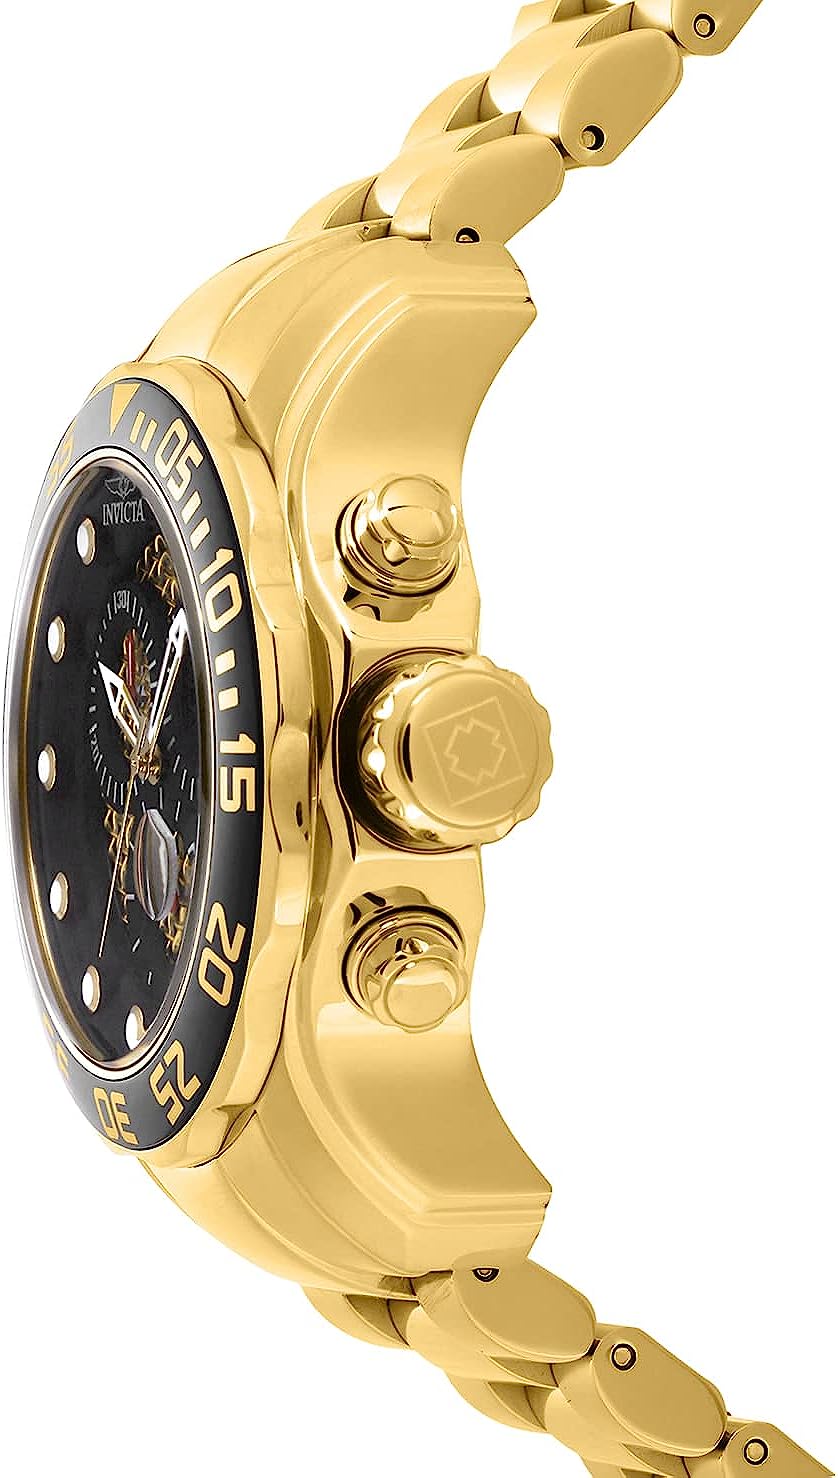 Pro Diver Analog Display Swiss Quartz Gold Watch